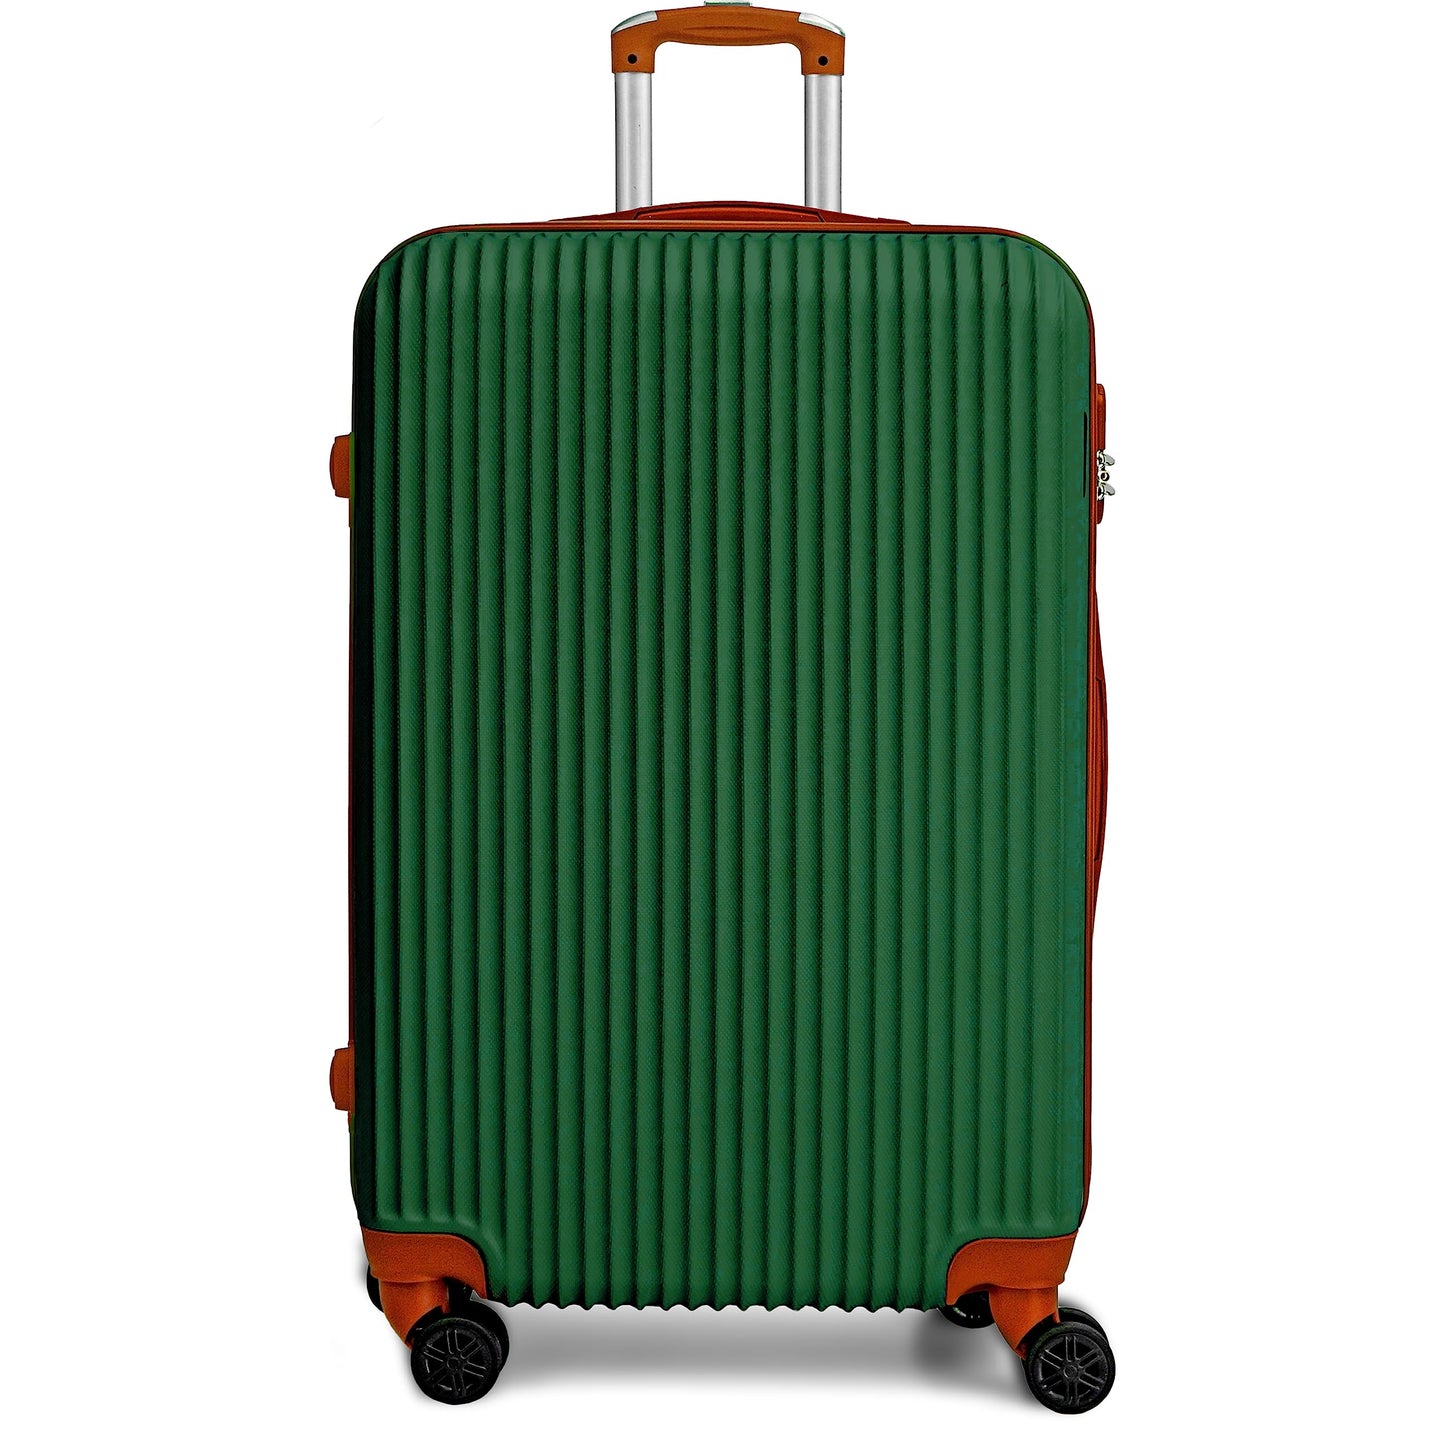 CALDARIUS Suitcase Medium Size| Hard Shell | Lightweight | 4 Dual Spinner Wheels | Trolley Luggage Suitcase | Medium 24" Hold Check in Luggage | Combination Lock (Olive Green, Medium 24'')